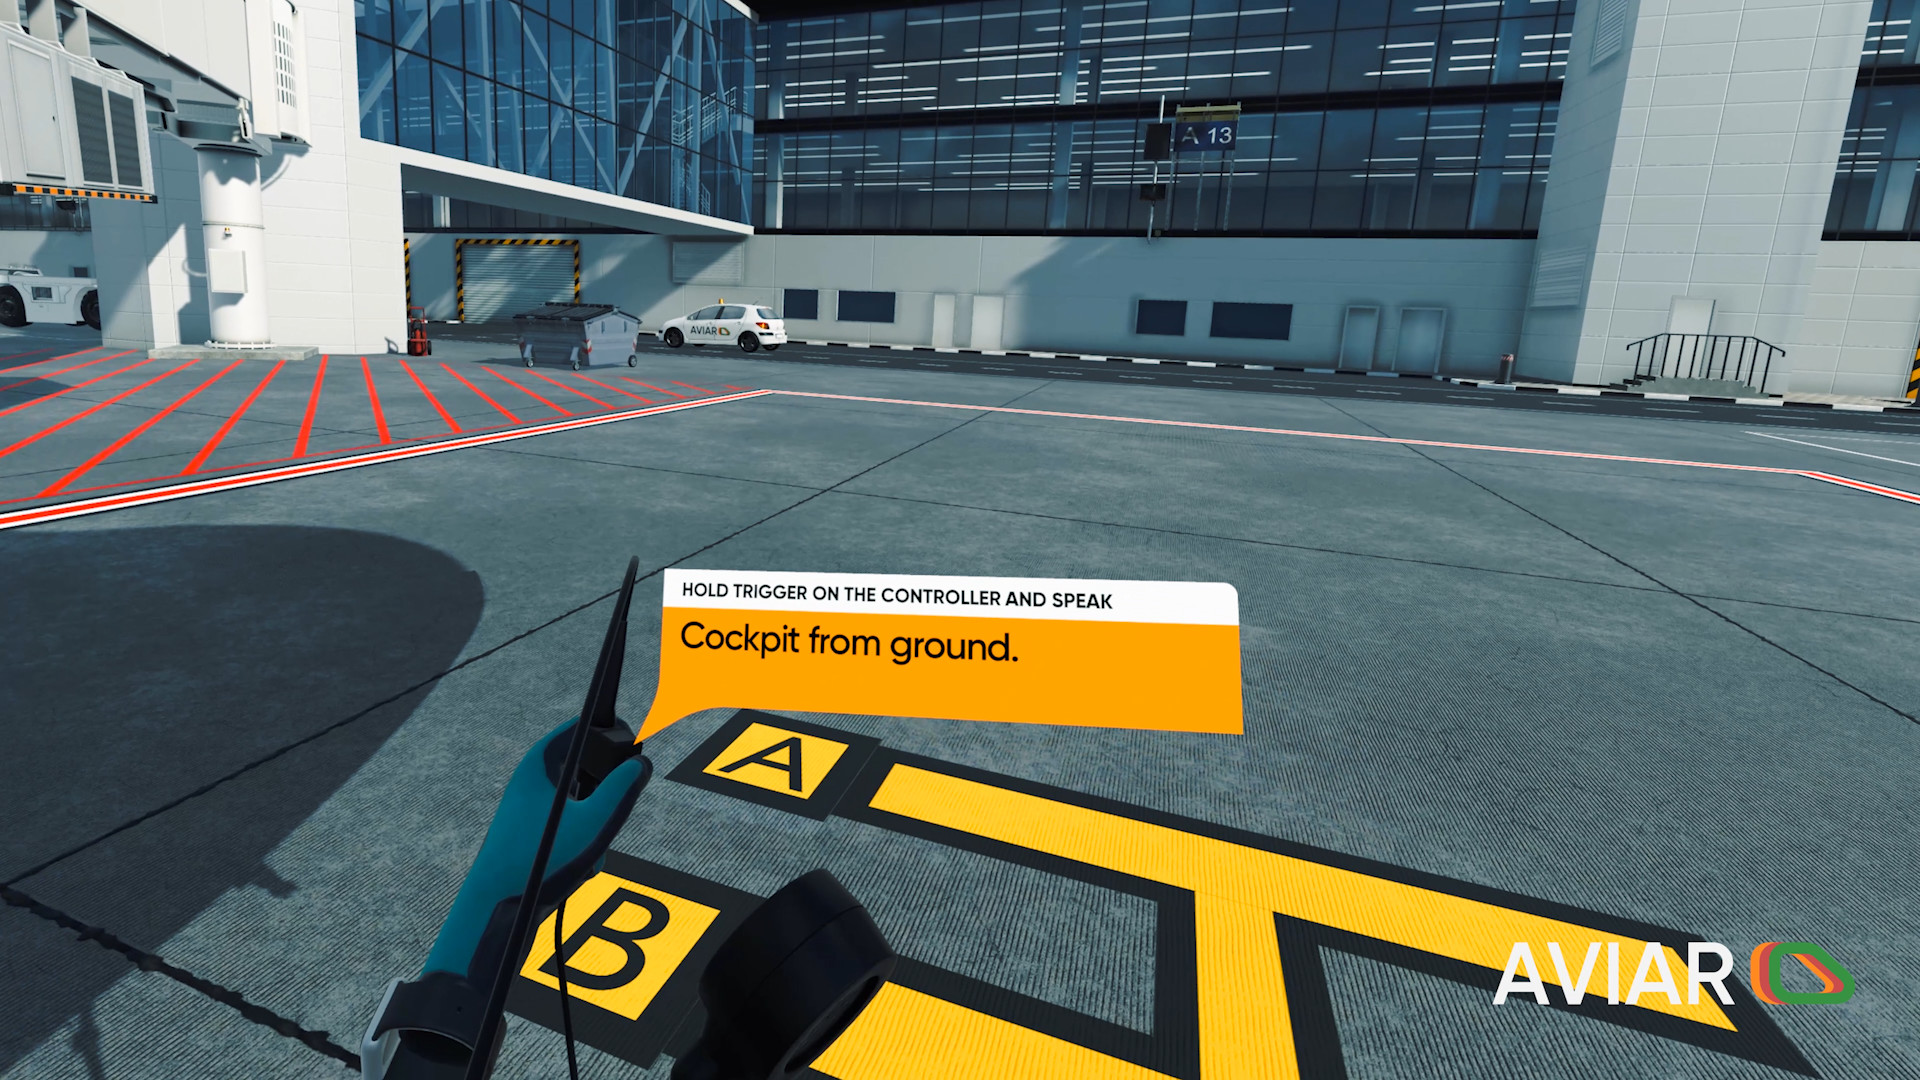 Airport Ground Handling Simulator VR Free Download